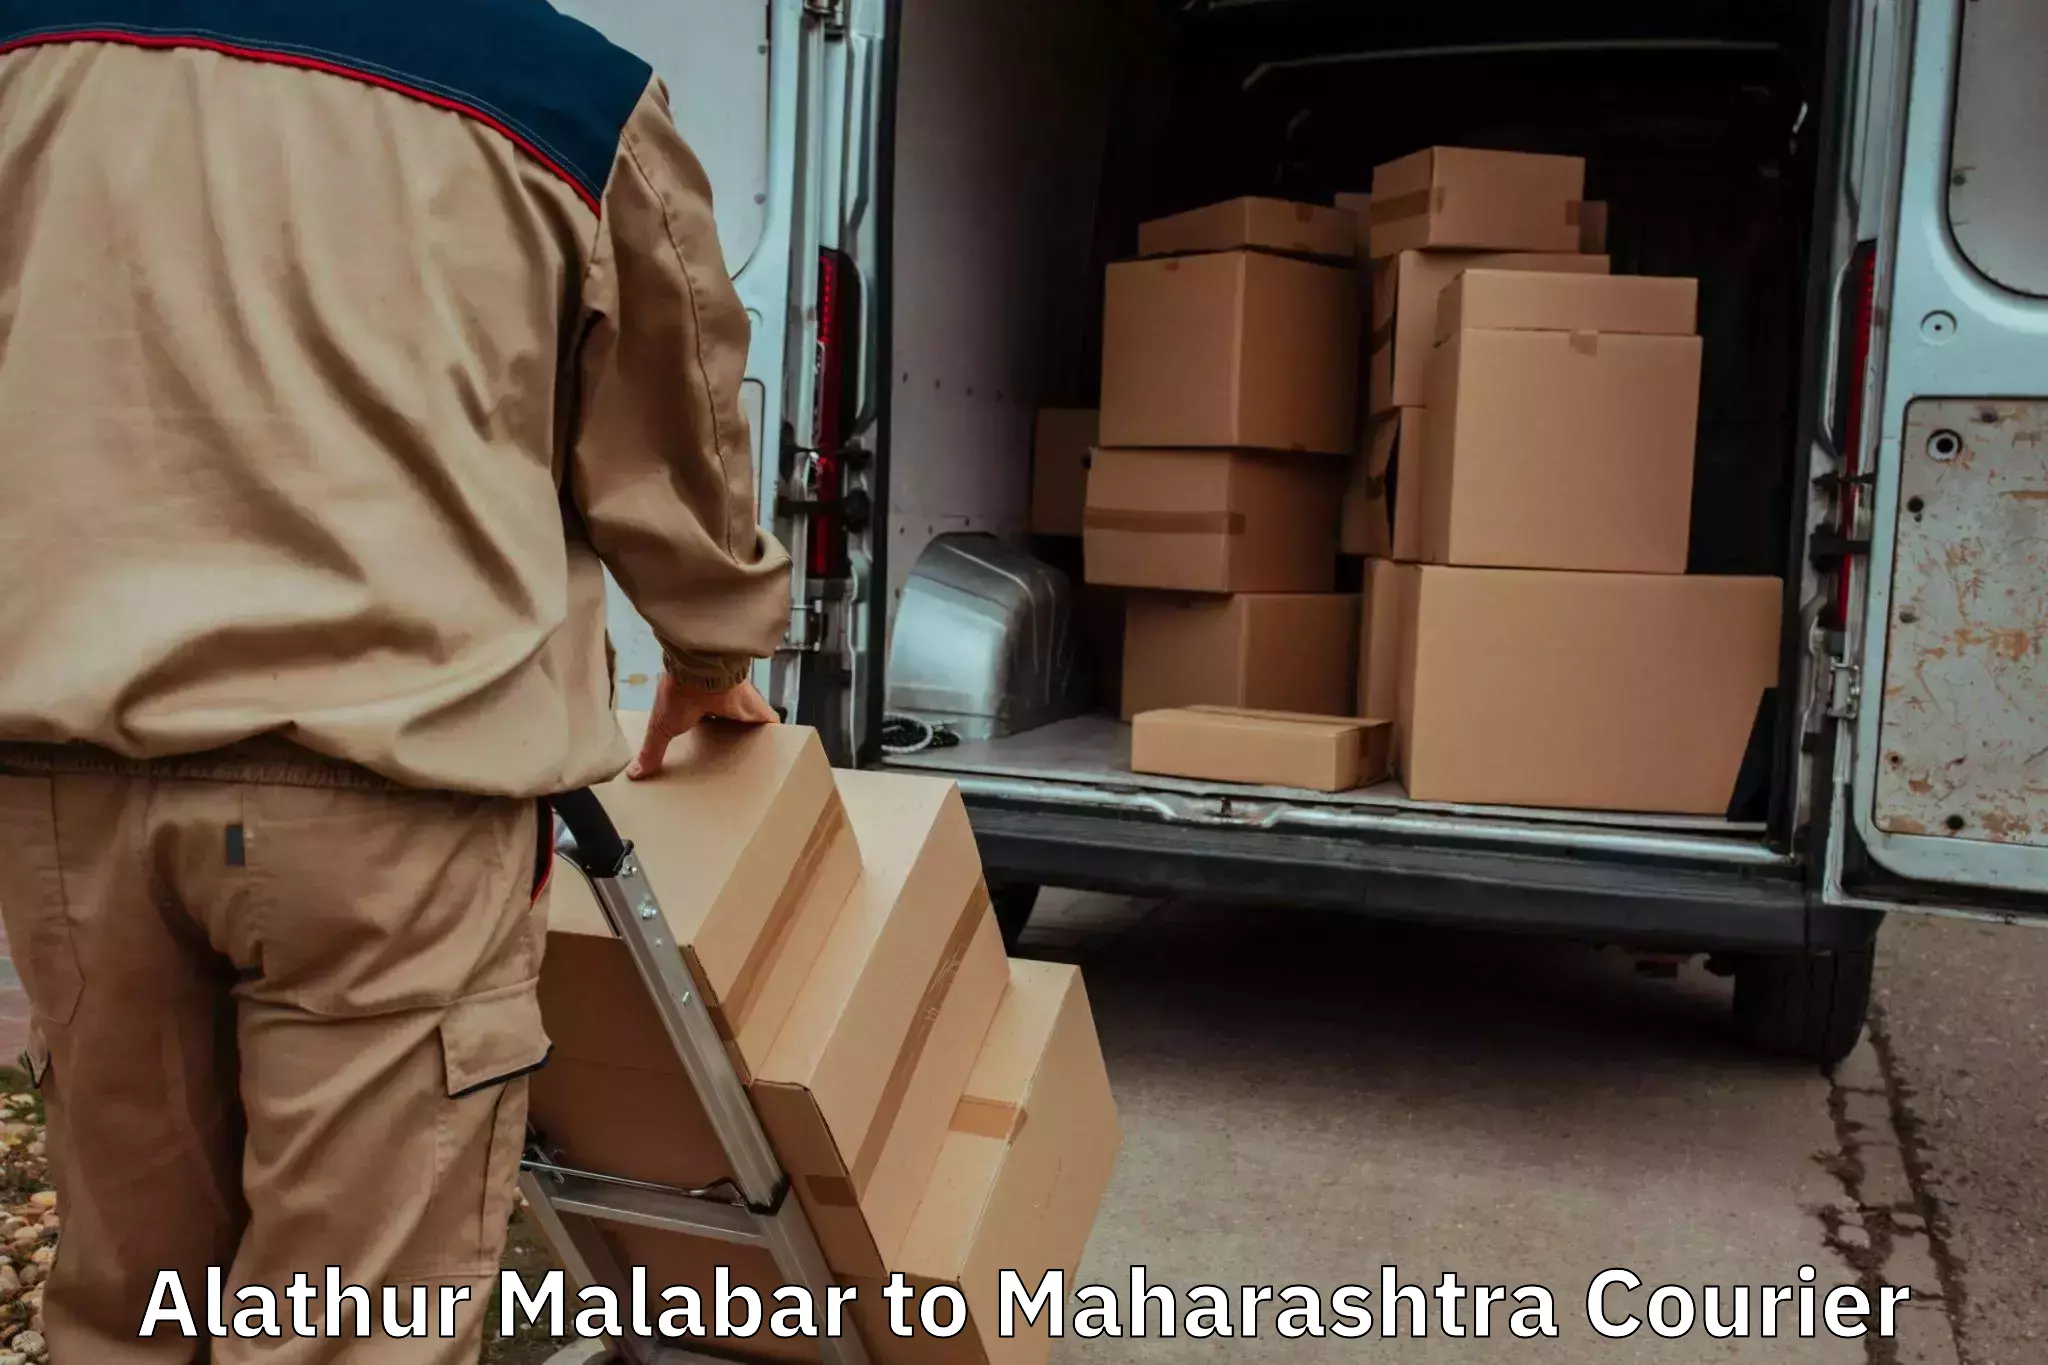 Home goods moving company Alathur Malabar to Patan Satara